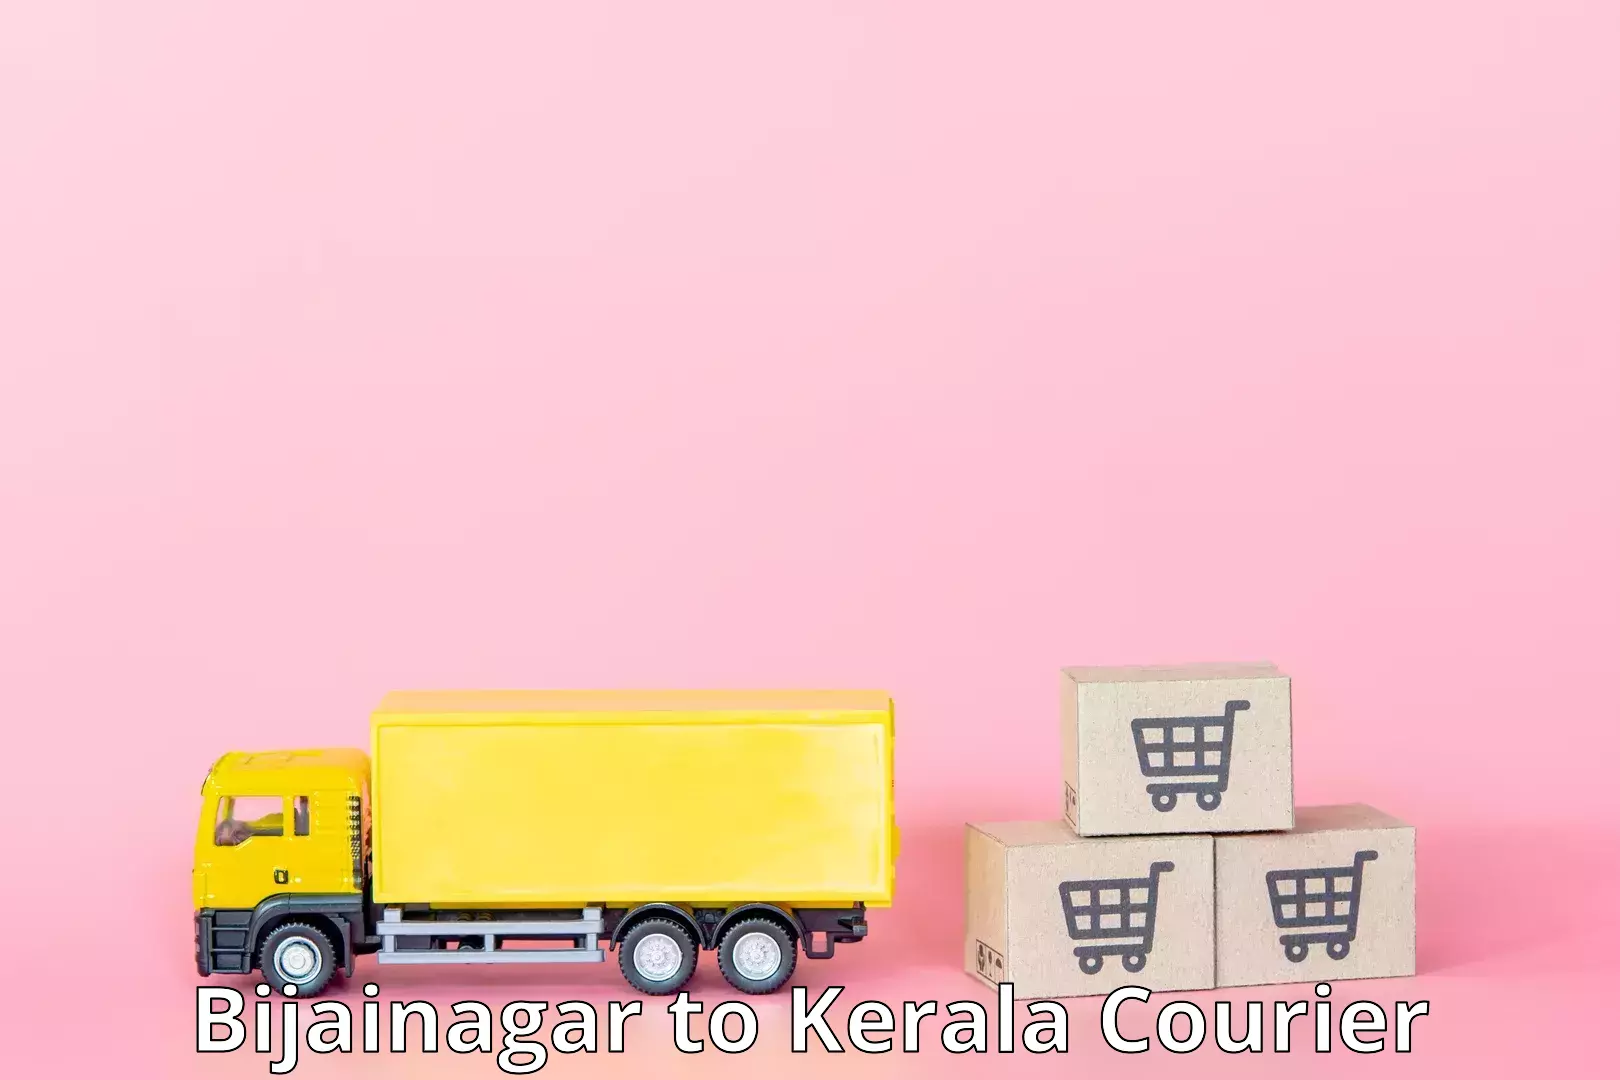 Reliable courier service in Bijainagar to Kerala